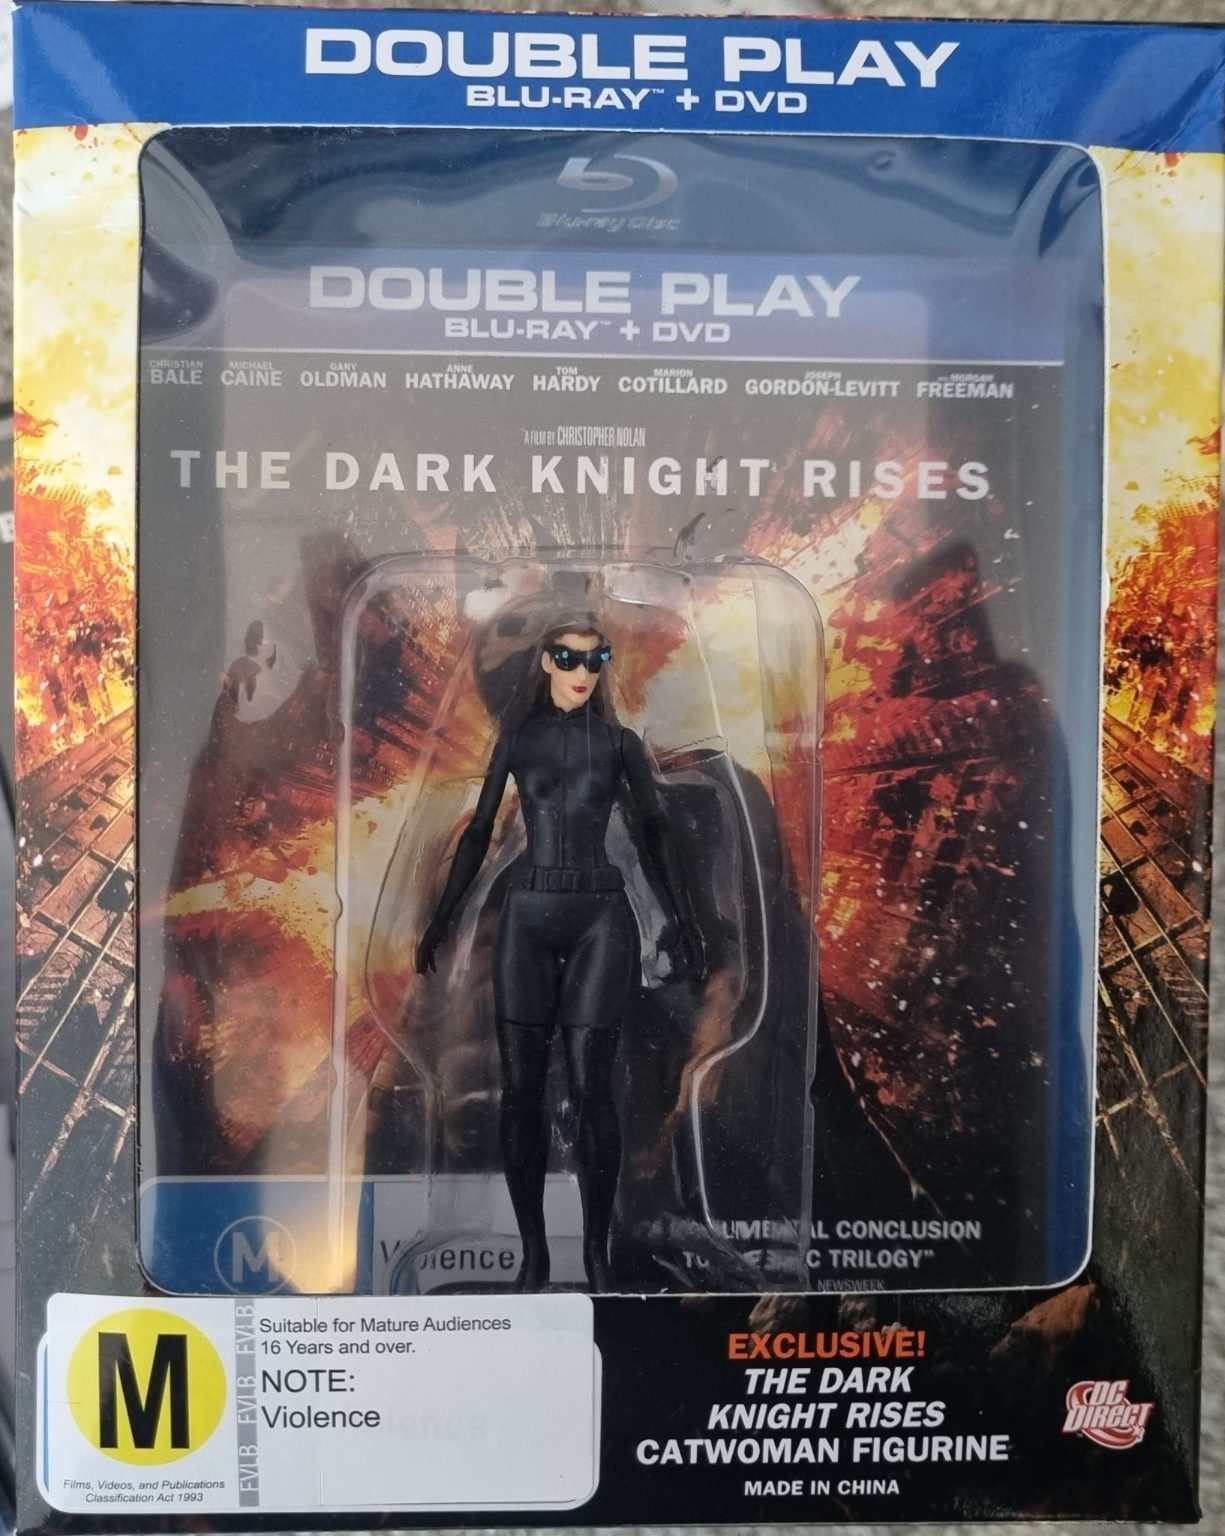 The Dark Knight Rises with Cat Woman figurine (Blu-ray/DVD)